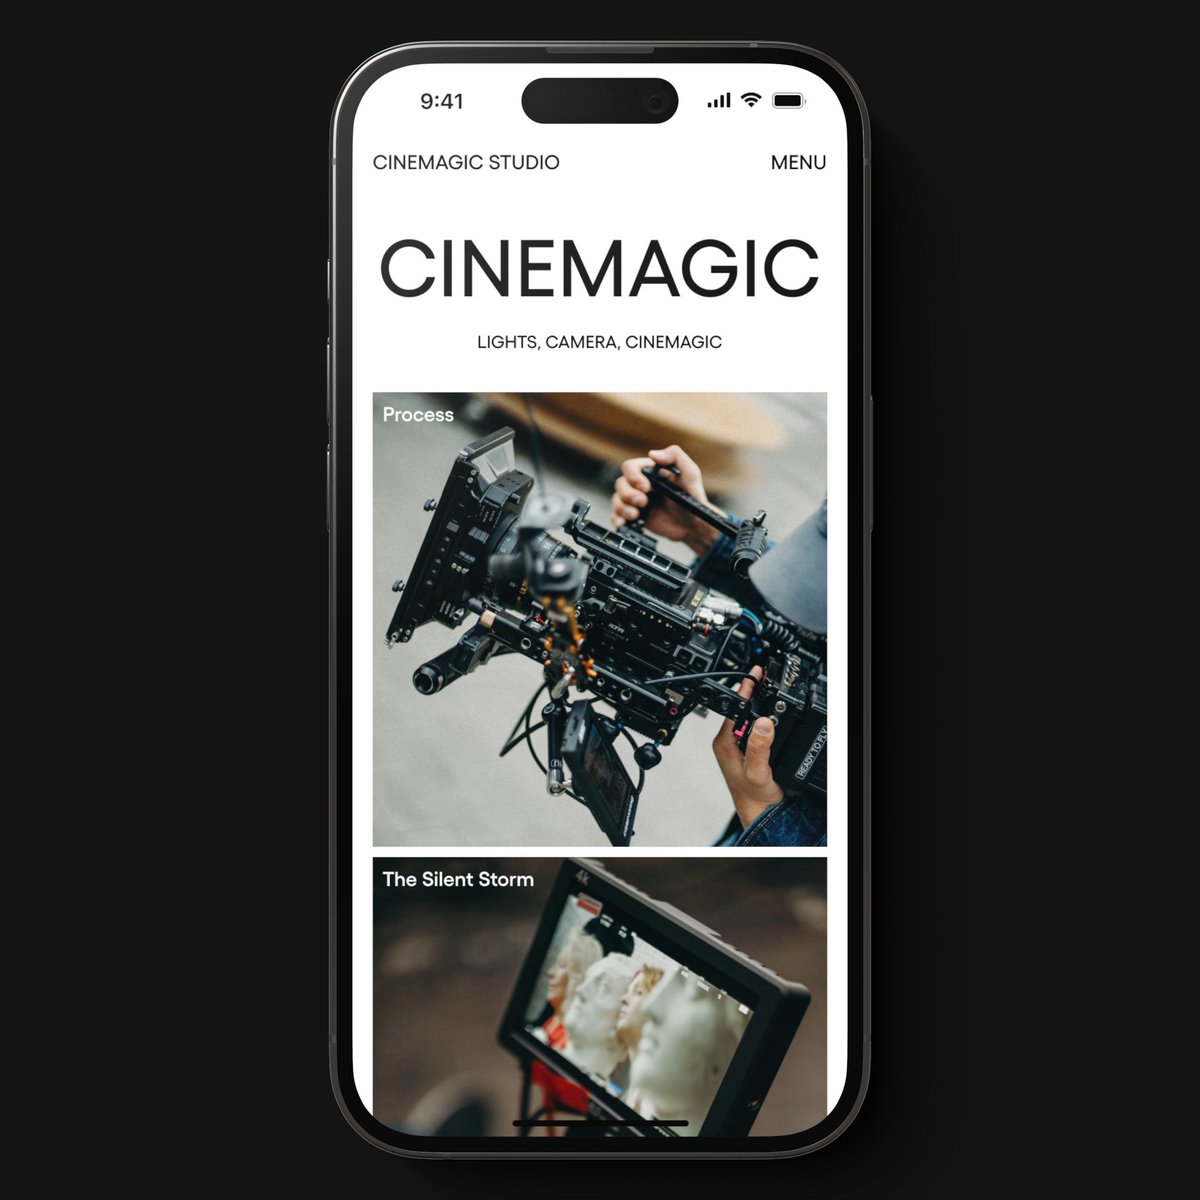 Cinemagic Studio (Mobile)

instagram.com/niveshbirangal/
behance.net/niveshbirangal
dribbble.com/niveshbirangal

#ui #ux #uiux #figma #uxdesign #uidesign #design #behance #dribbble #adobexd #mobile #mobiledesign #web #frontend #typography #grid #grids #layout #dailyui #webdesign #creative